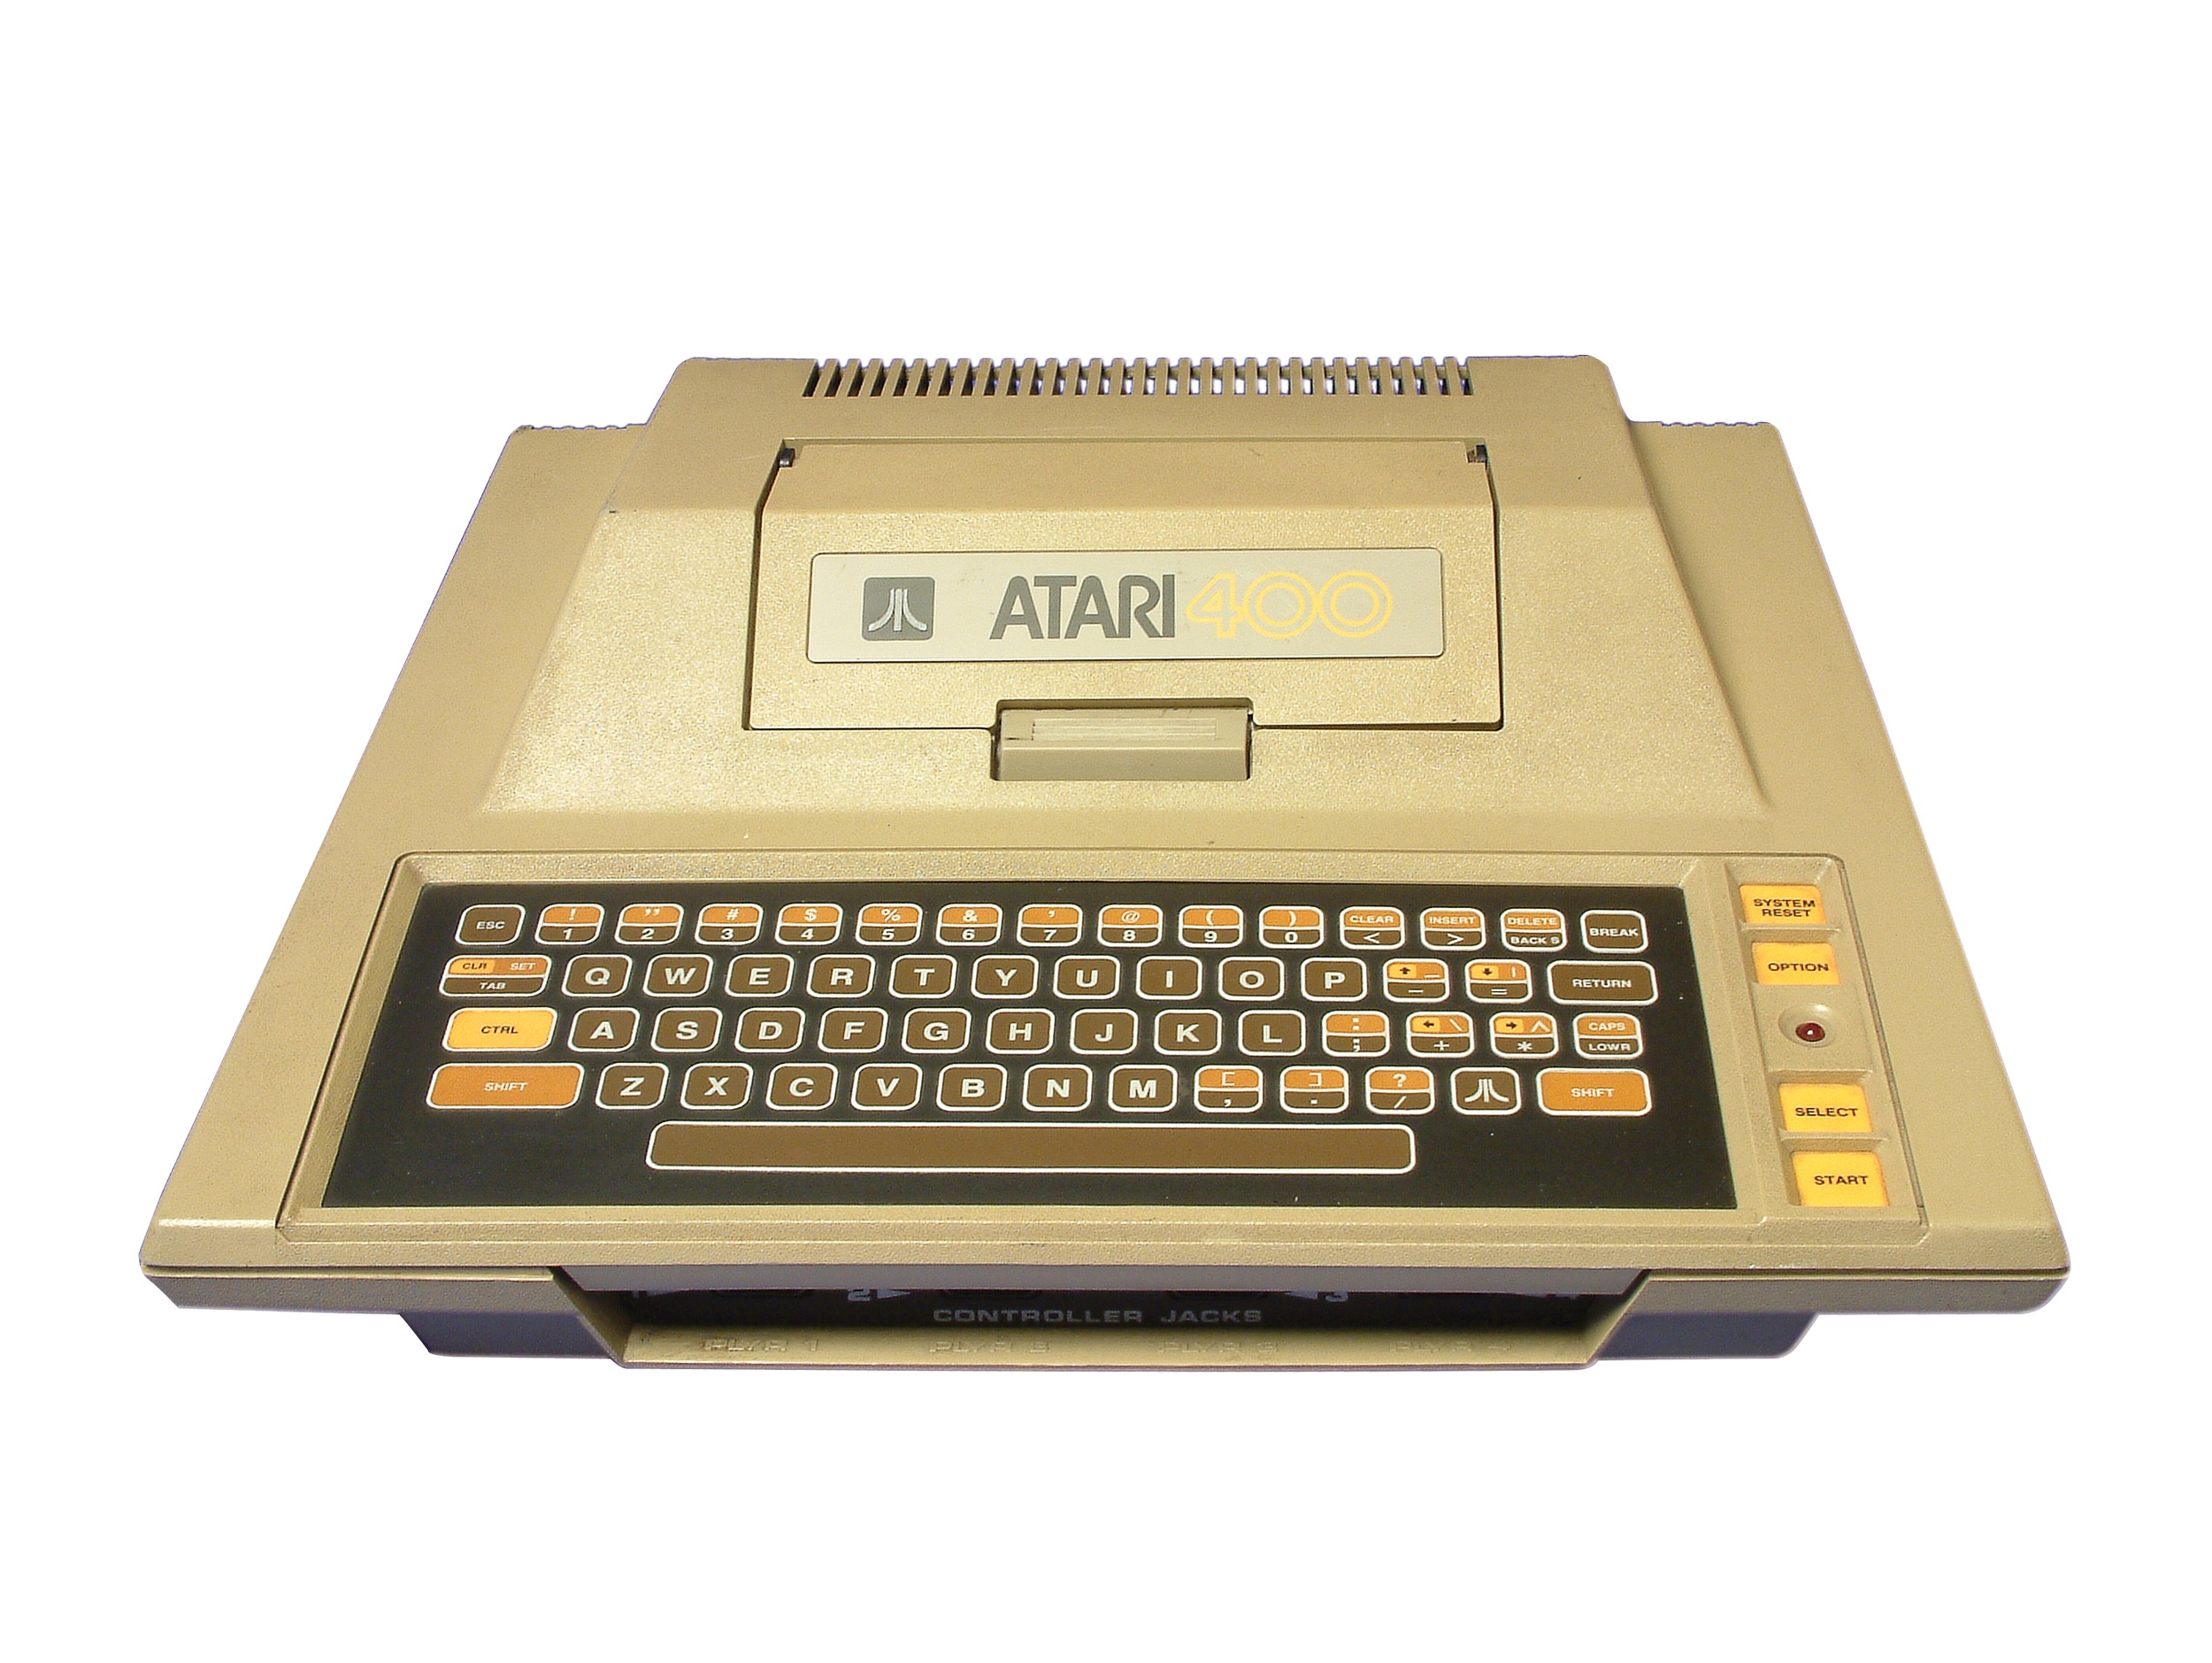 Atari 400/800 (Computerspielemuseum Berlin CC BY-SA)